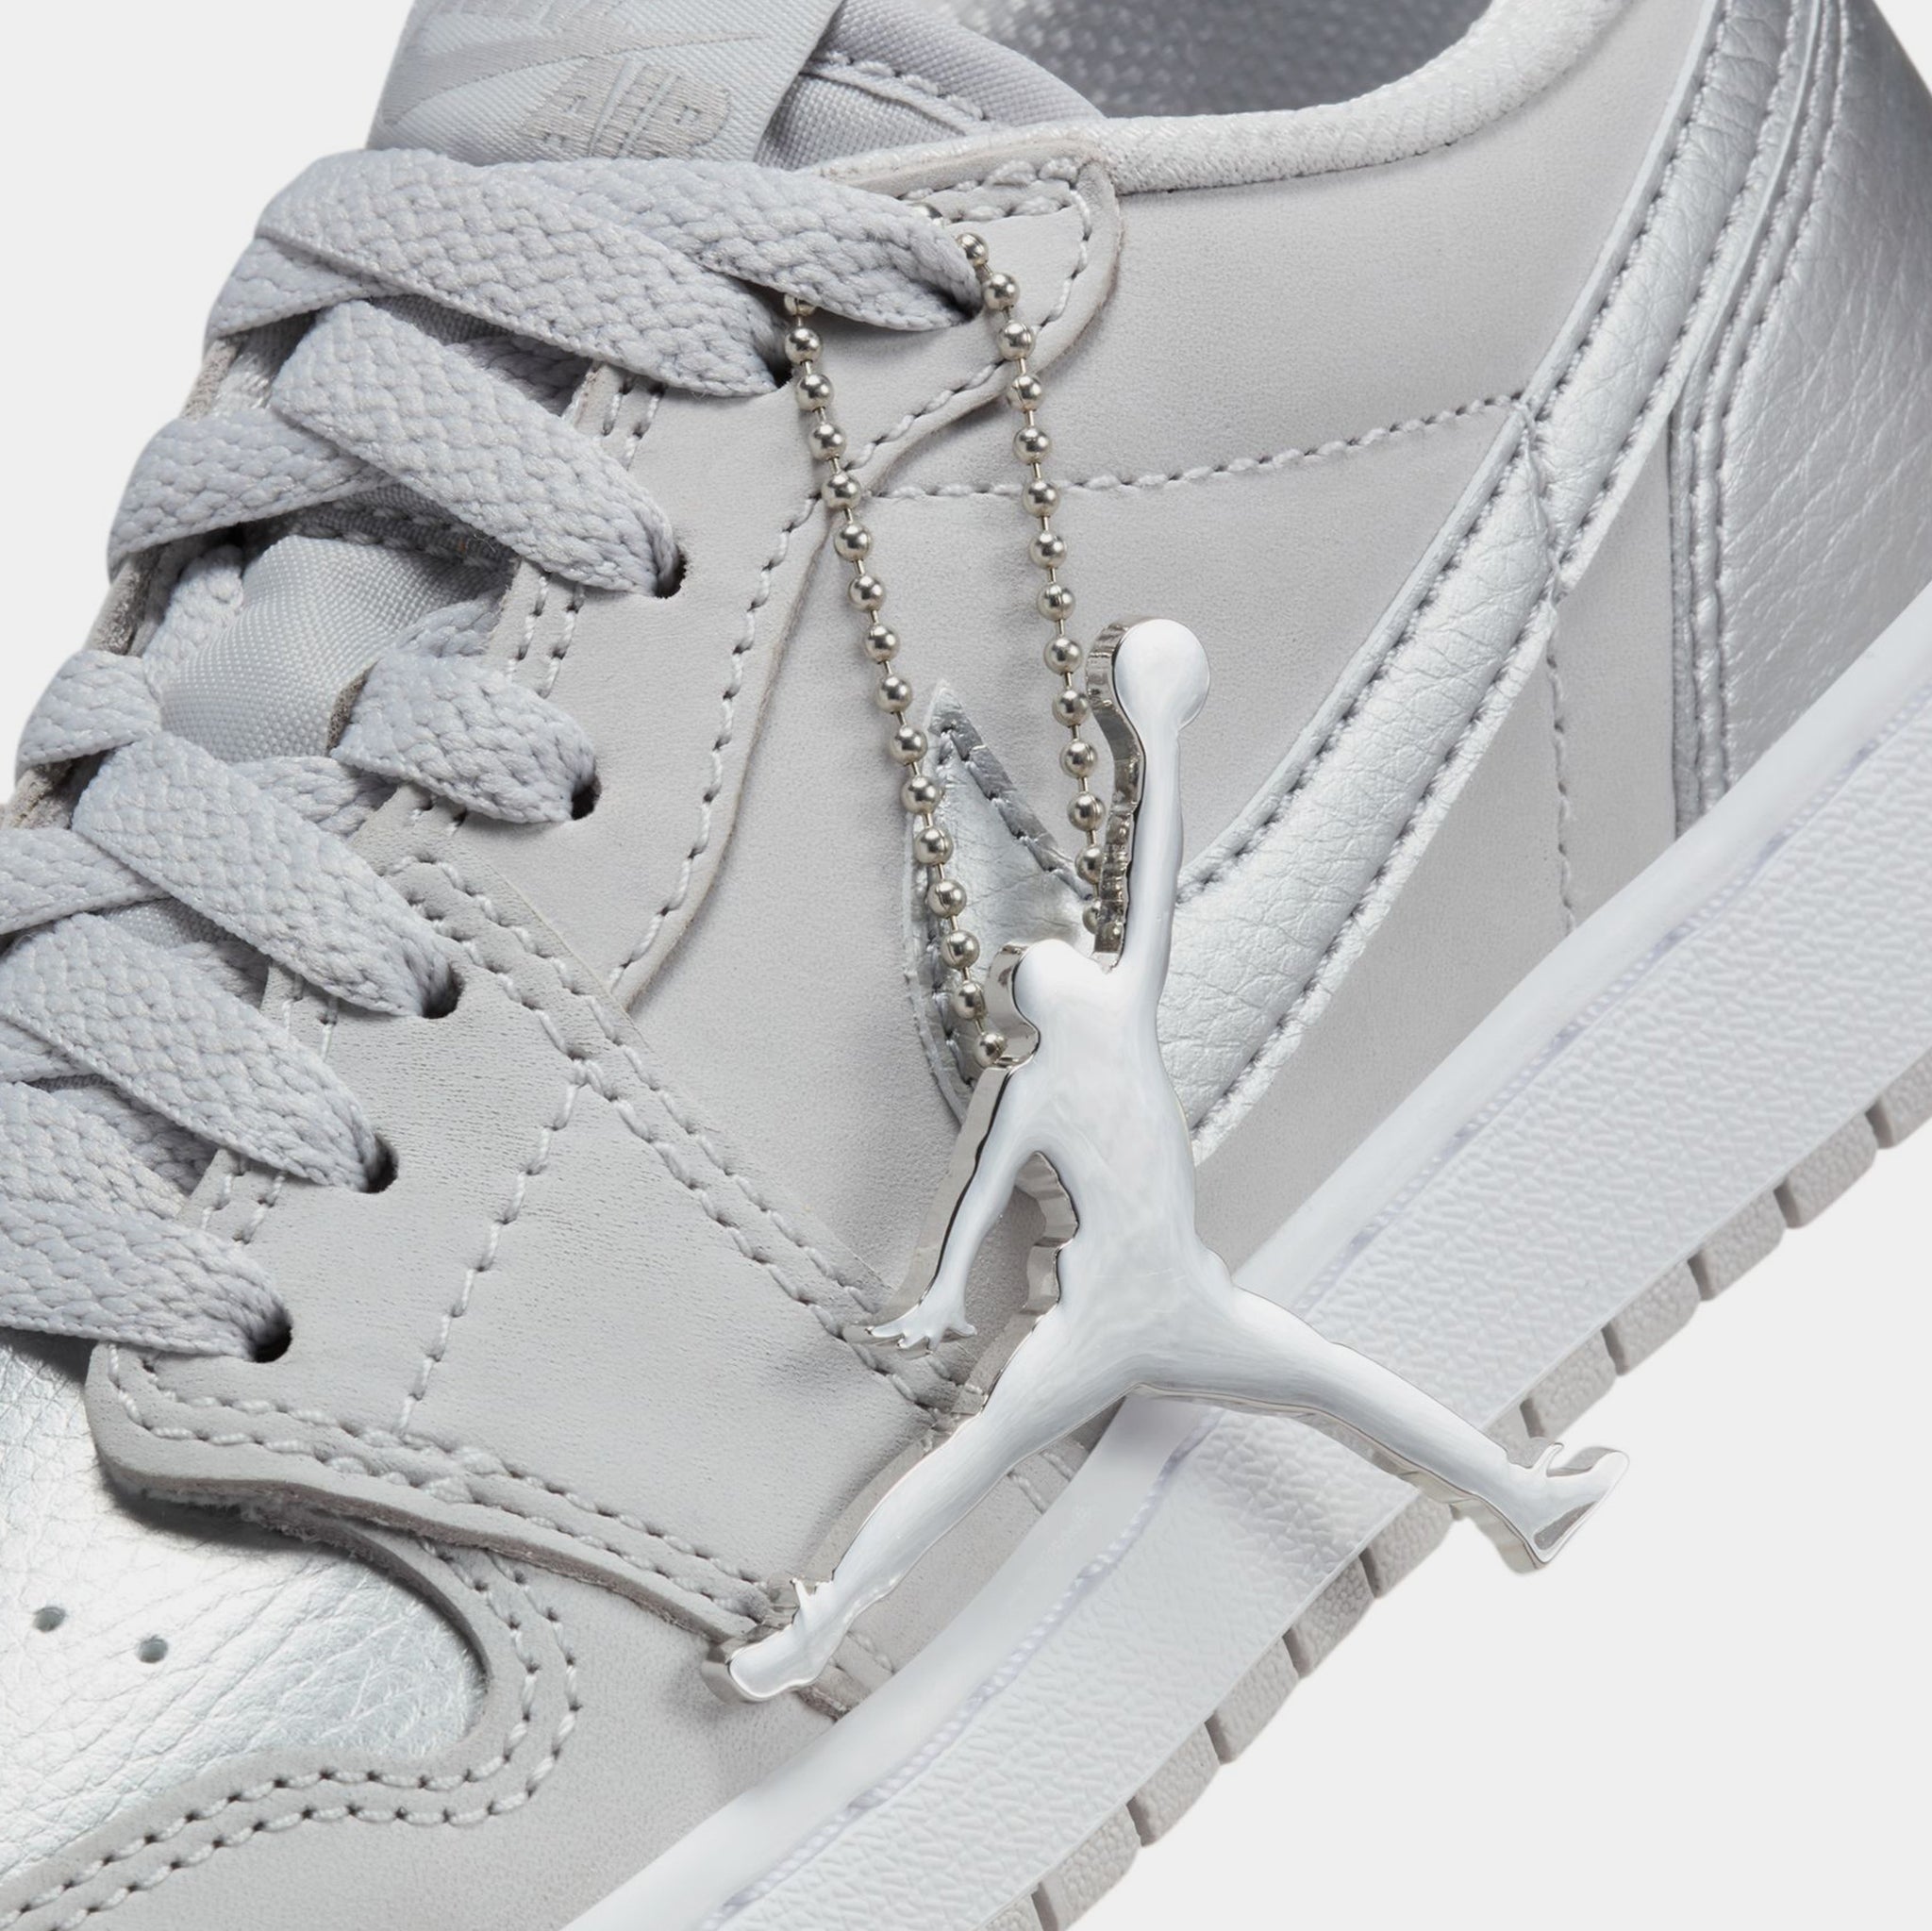 Air Jordan 1 Retro Low OG Metallic Silver Grade School Lifestyle Shoes  (Neutral Grey/Metallic Silver/White)